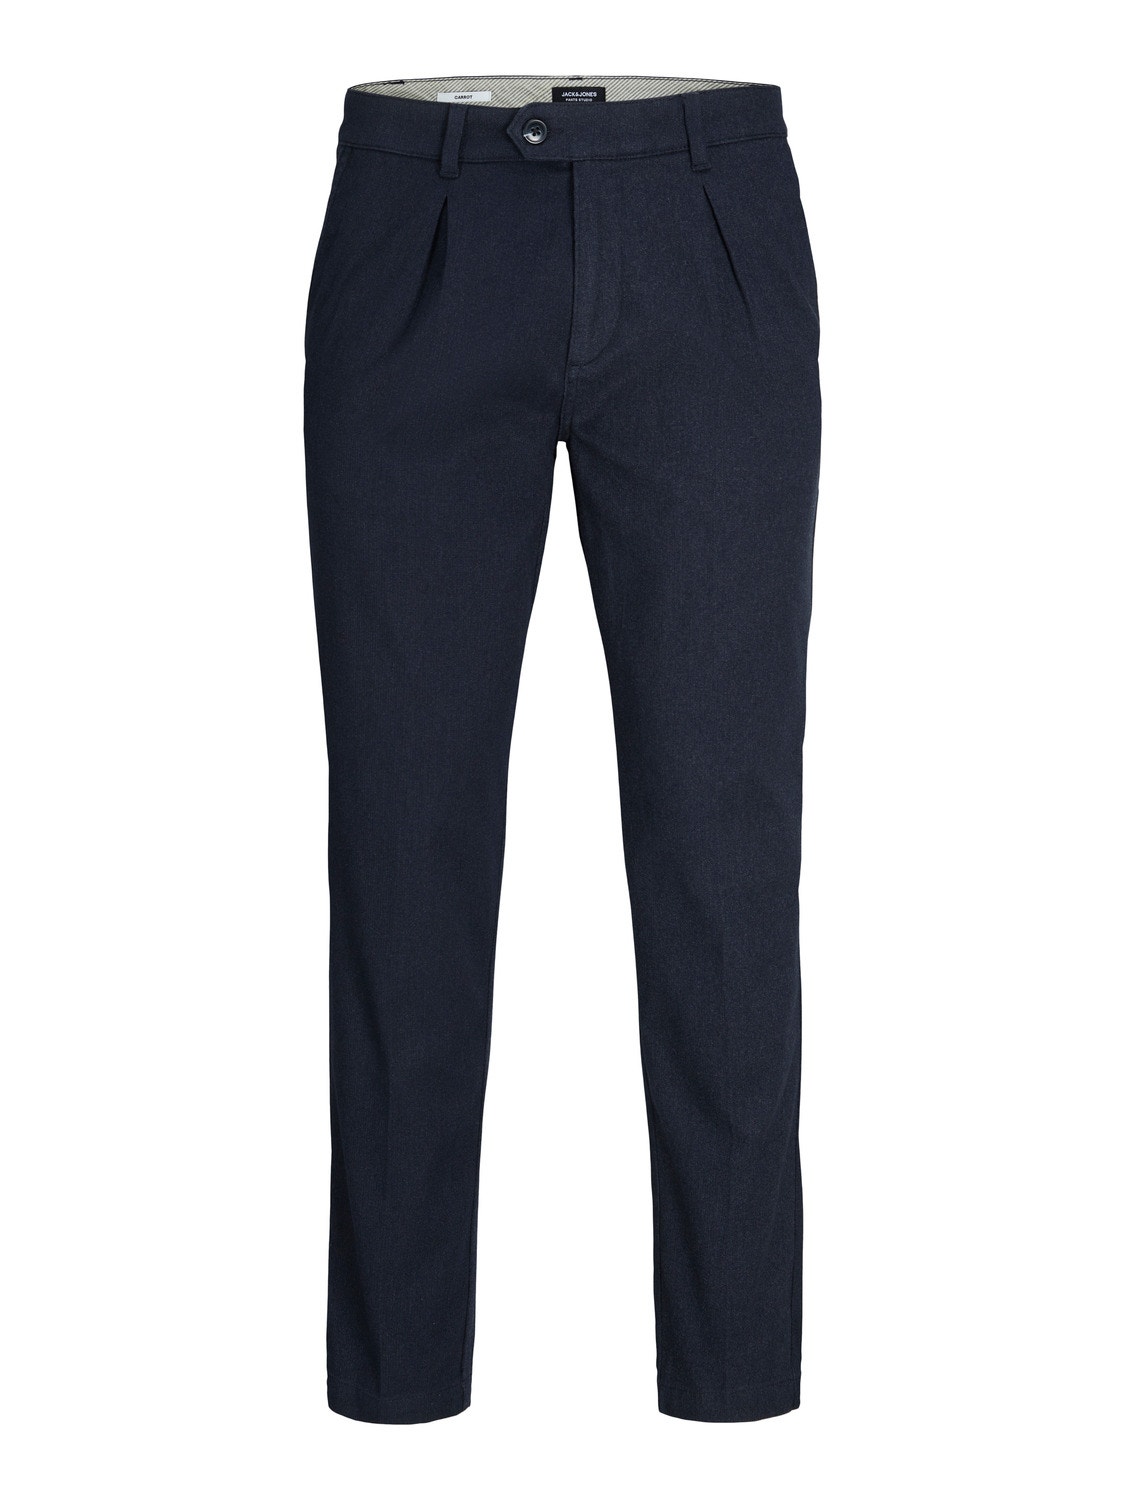 Jack & Jones Plus Size Carrot fit Chino trousers -Navy Blazer - 12247947